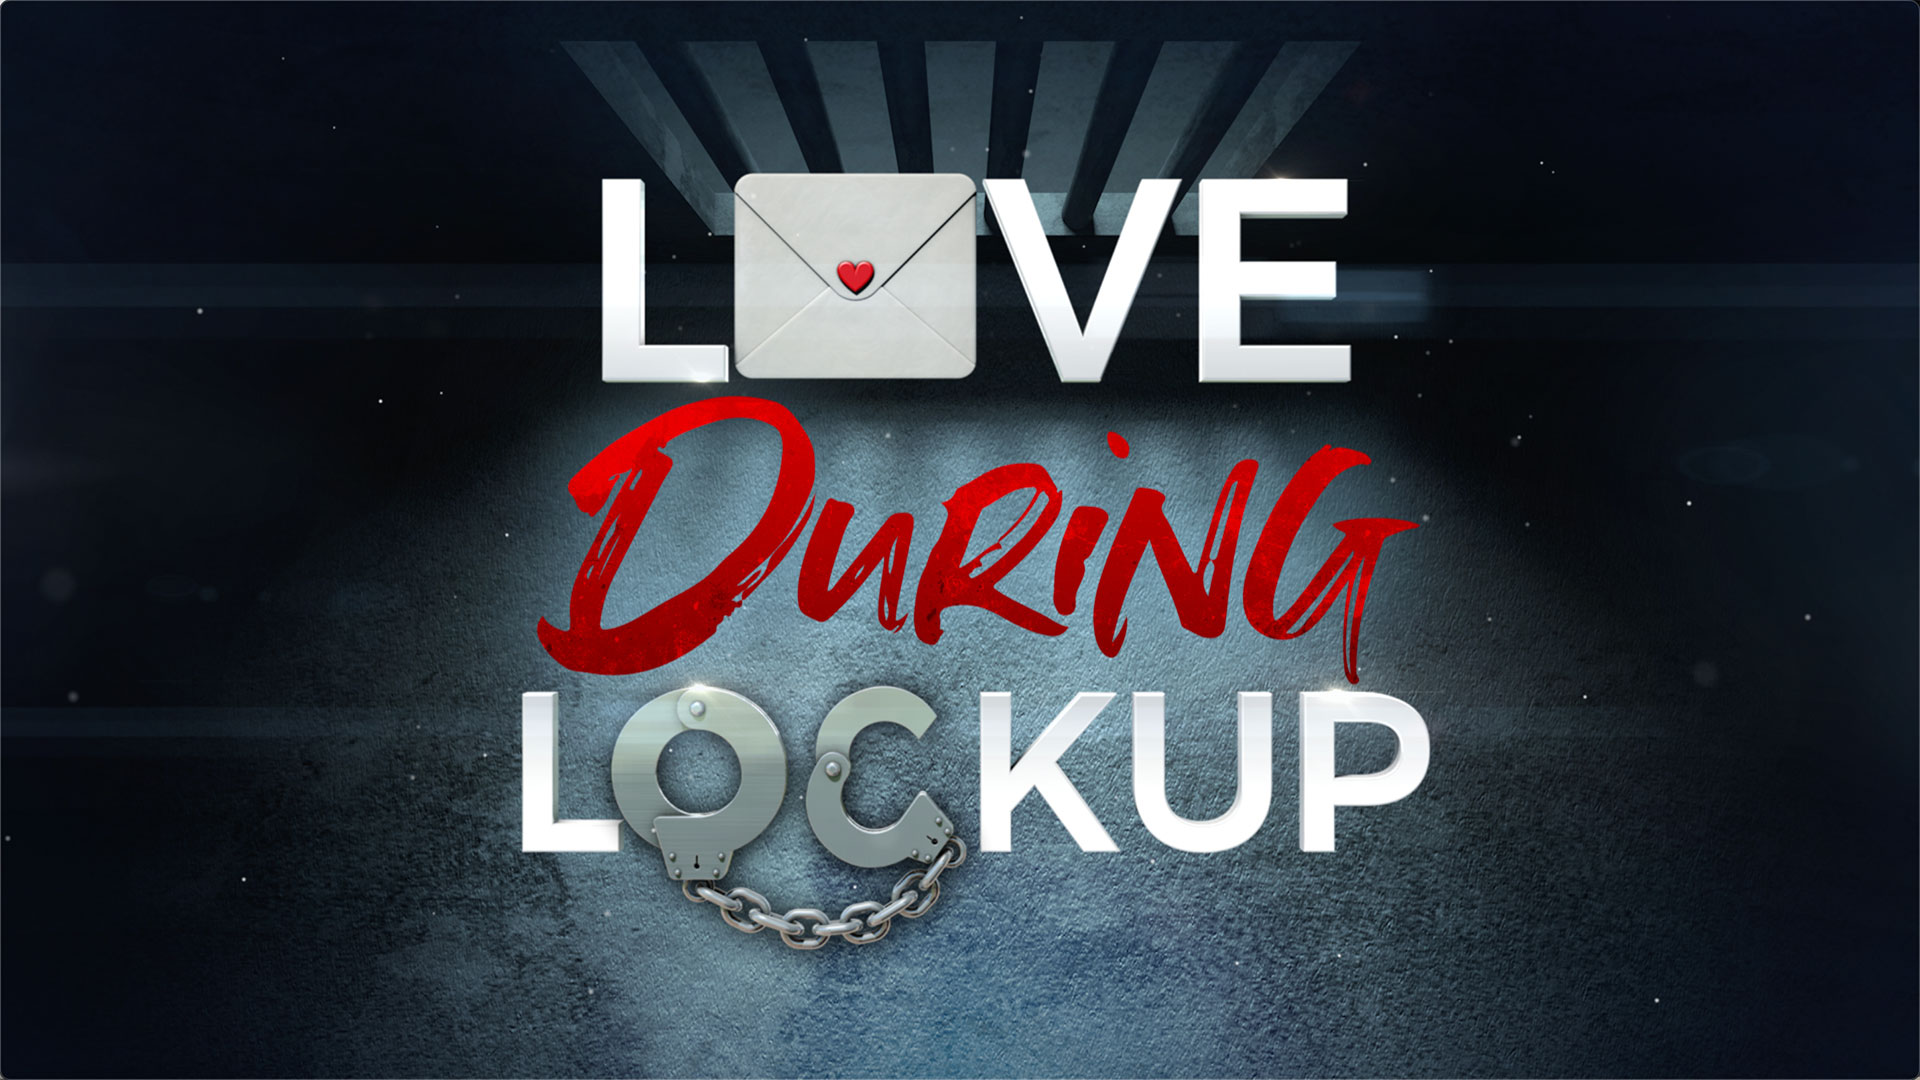 Introducing: "Love DURING Lockup"